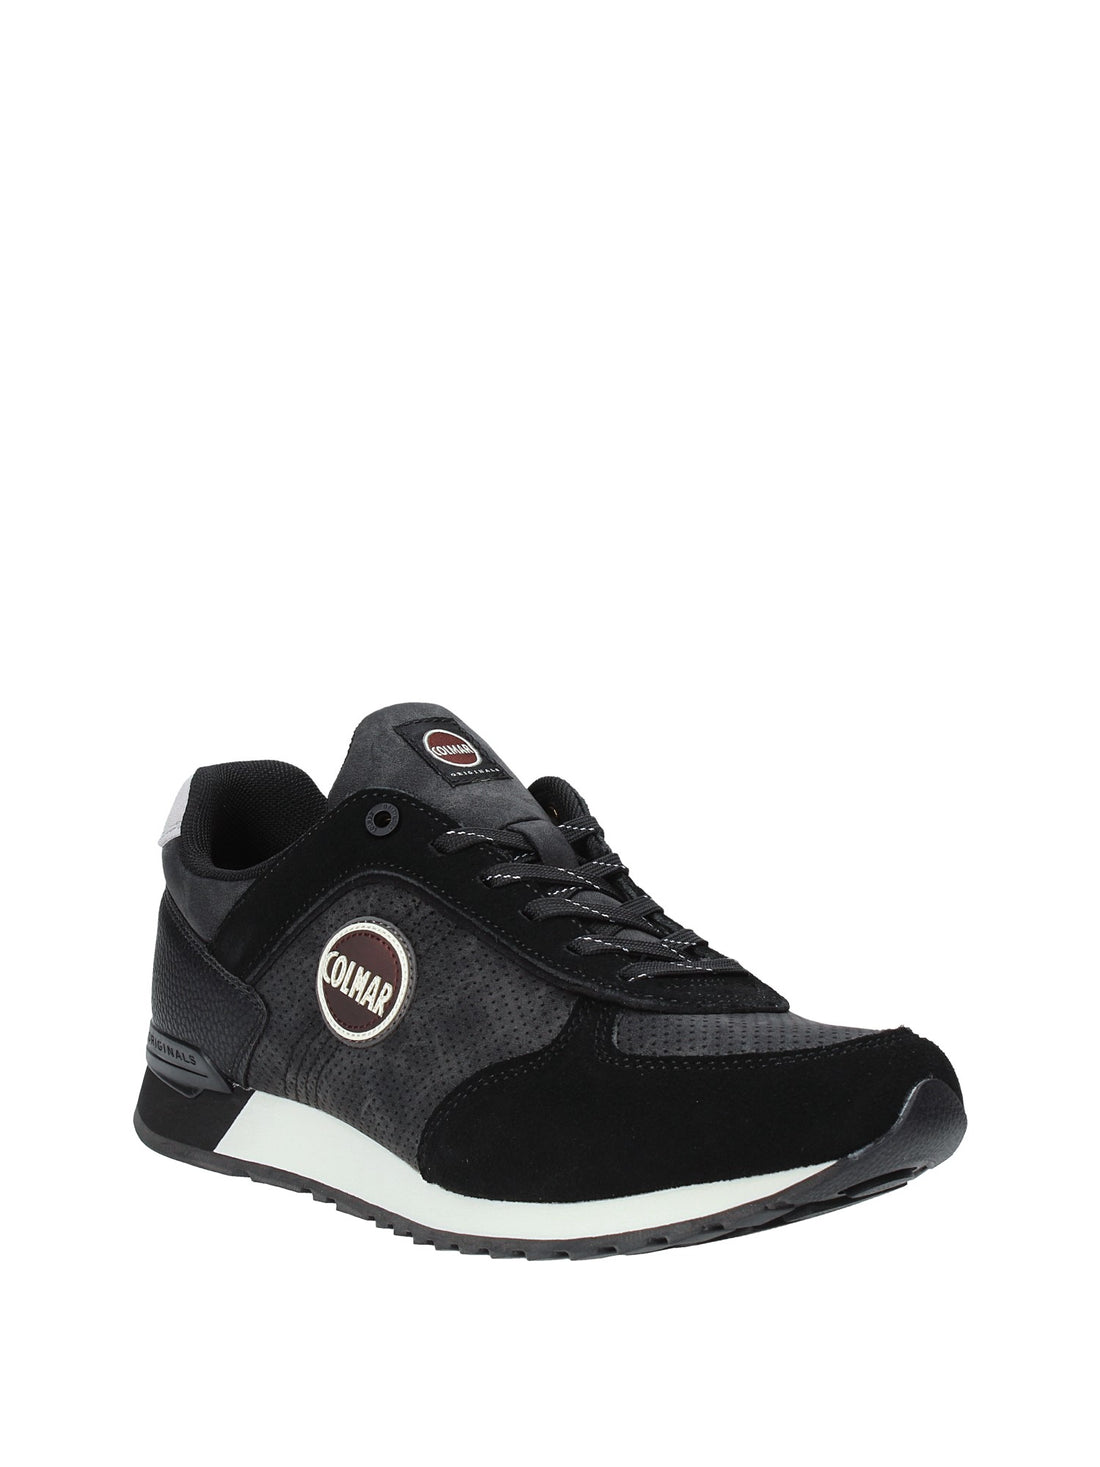 Sneakers Nero 021 Colmar